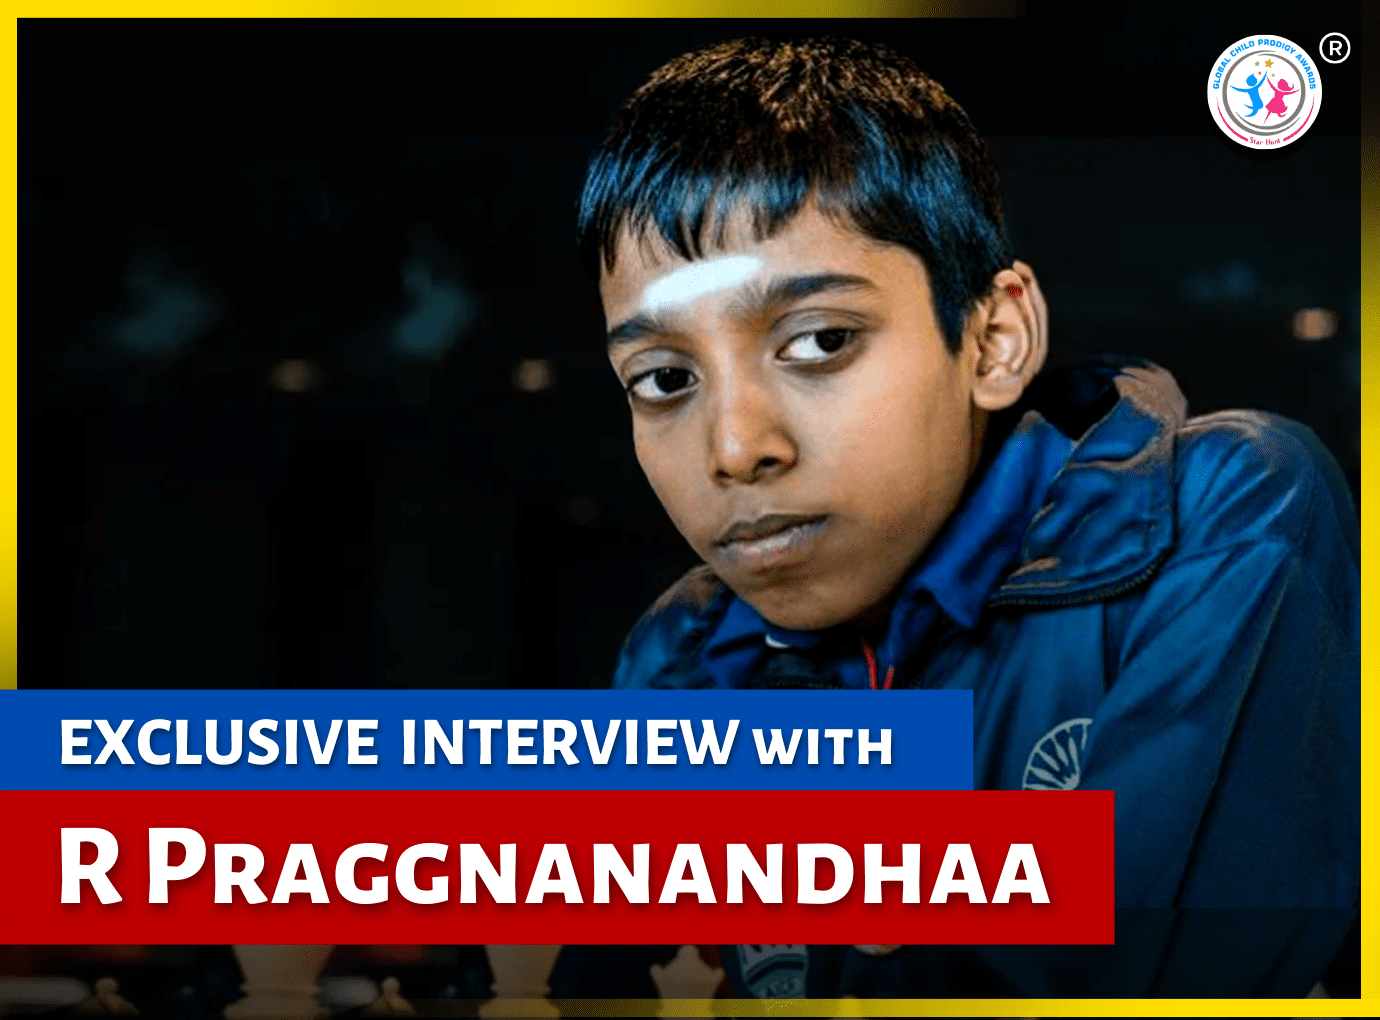 Praggnanandhaa: Pragga prodigy: The Rise and Rise of